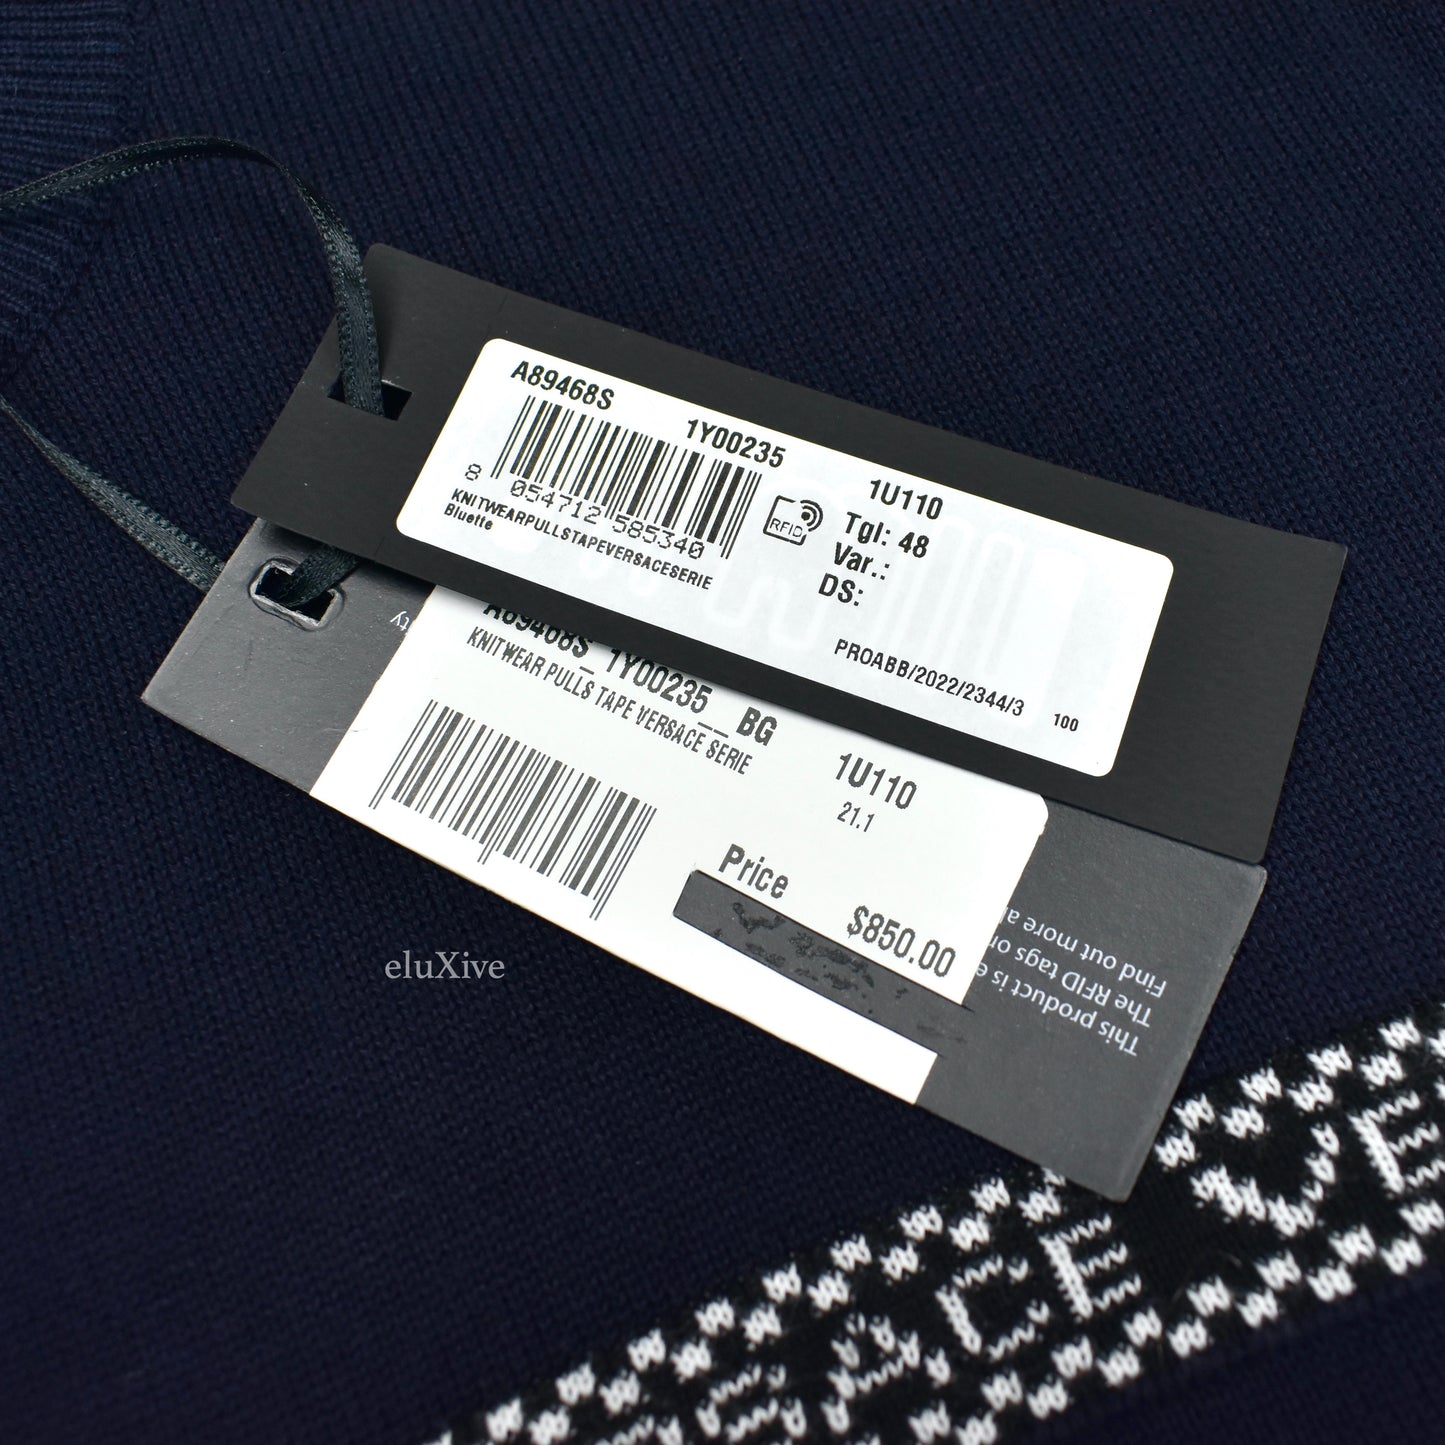 Versace - Logo Repeat Knit Crewneck Sweater (Navy)